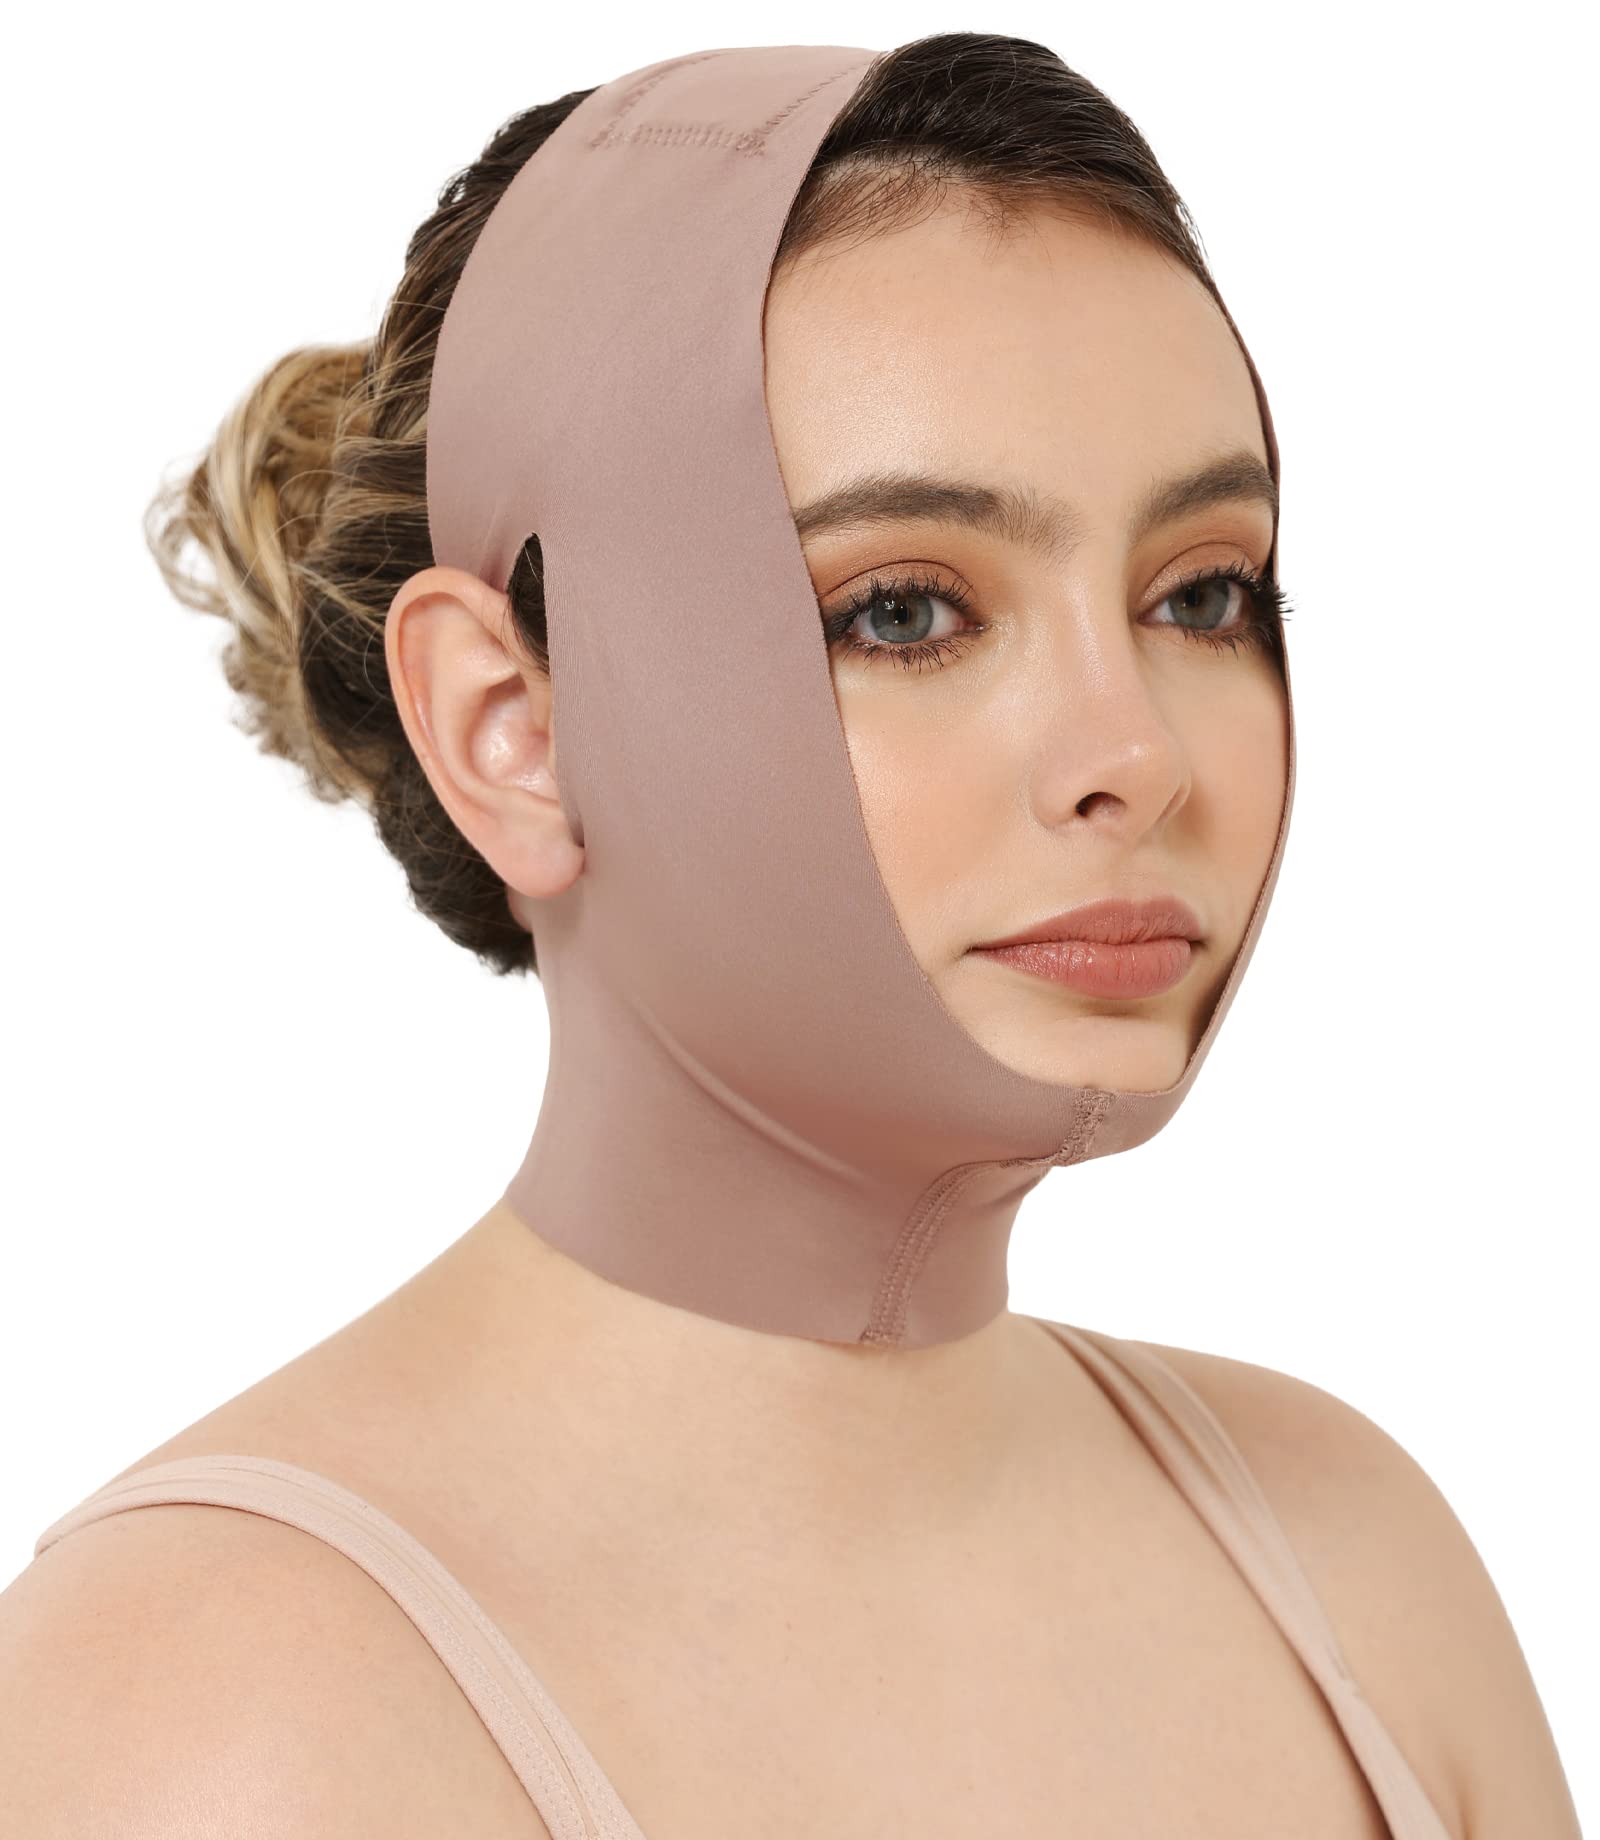 Chin Post Surgery Lipo Compression Slimmer Strap For Women